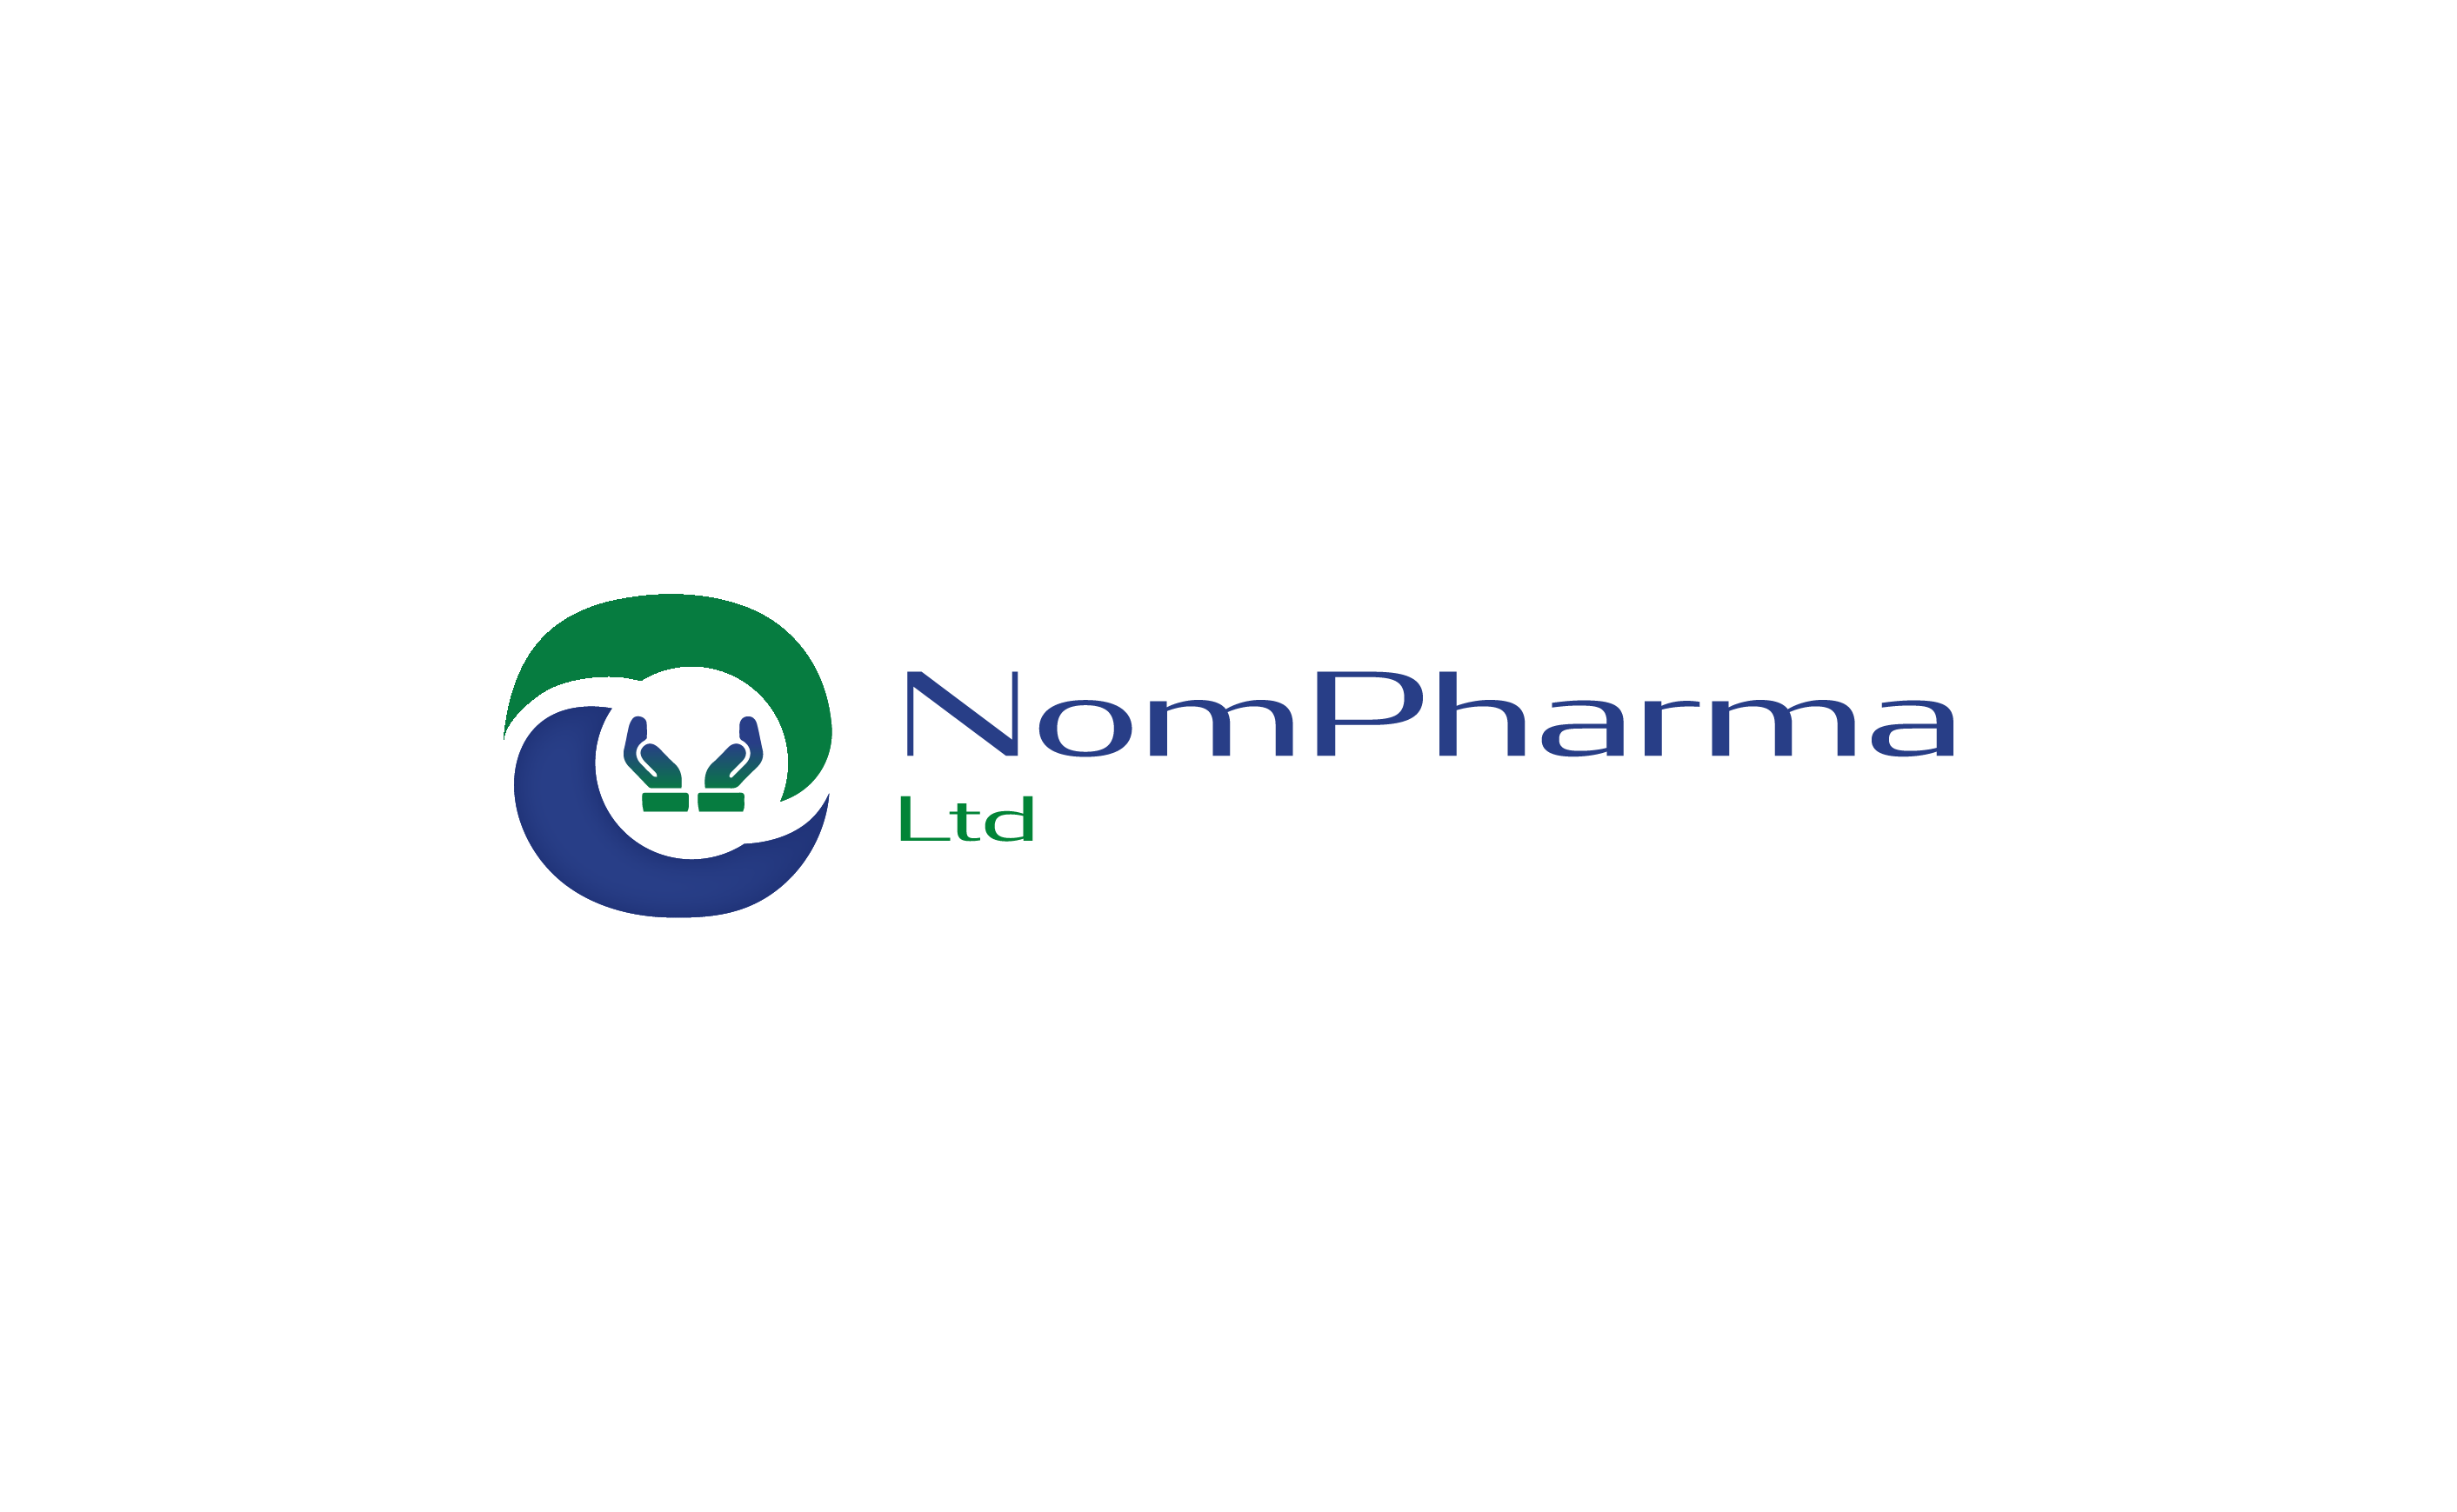 NomPharma Ltd Website Refresh Logo Update